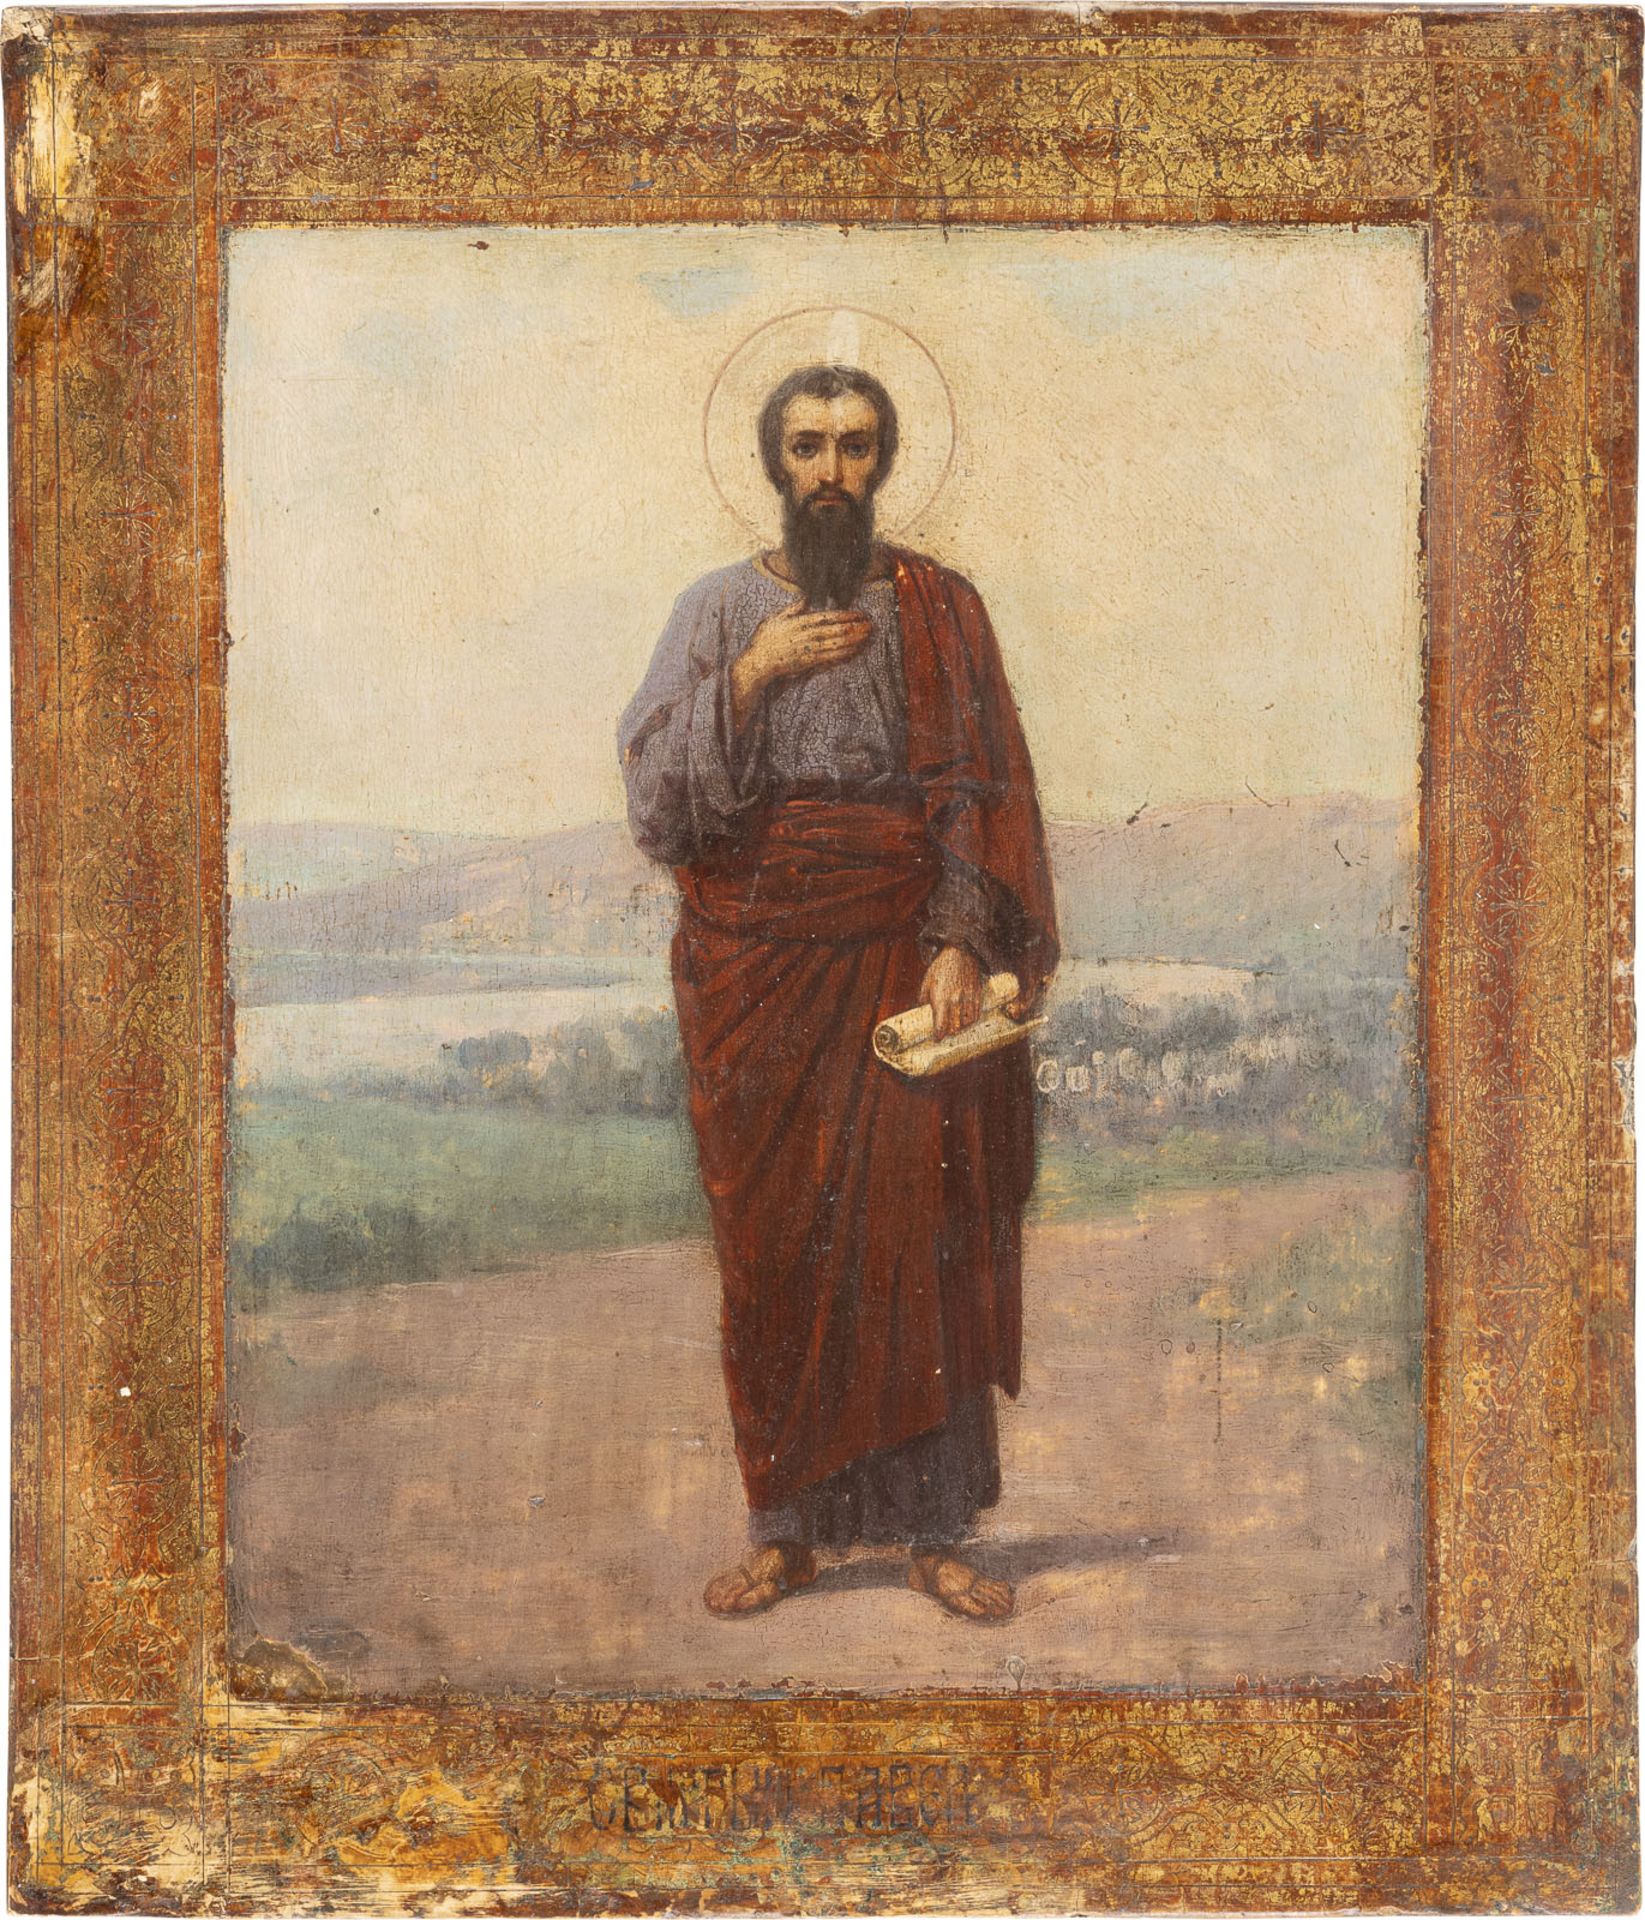 IKONE MIT DEM APOSTEL PAULUS - Image 3 of 3